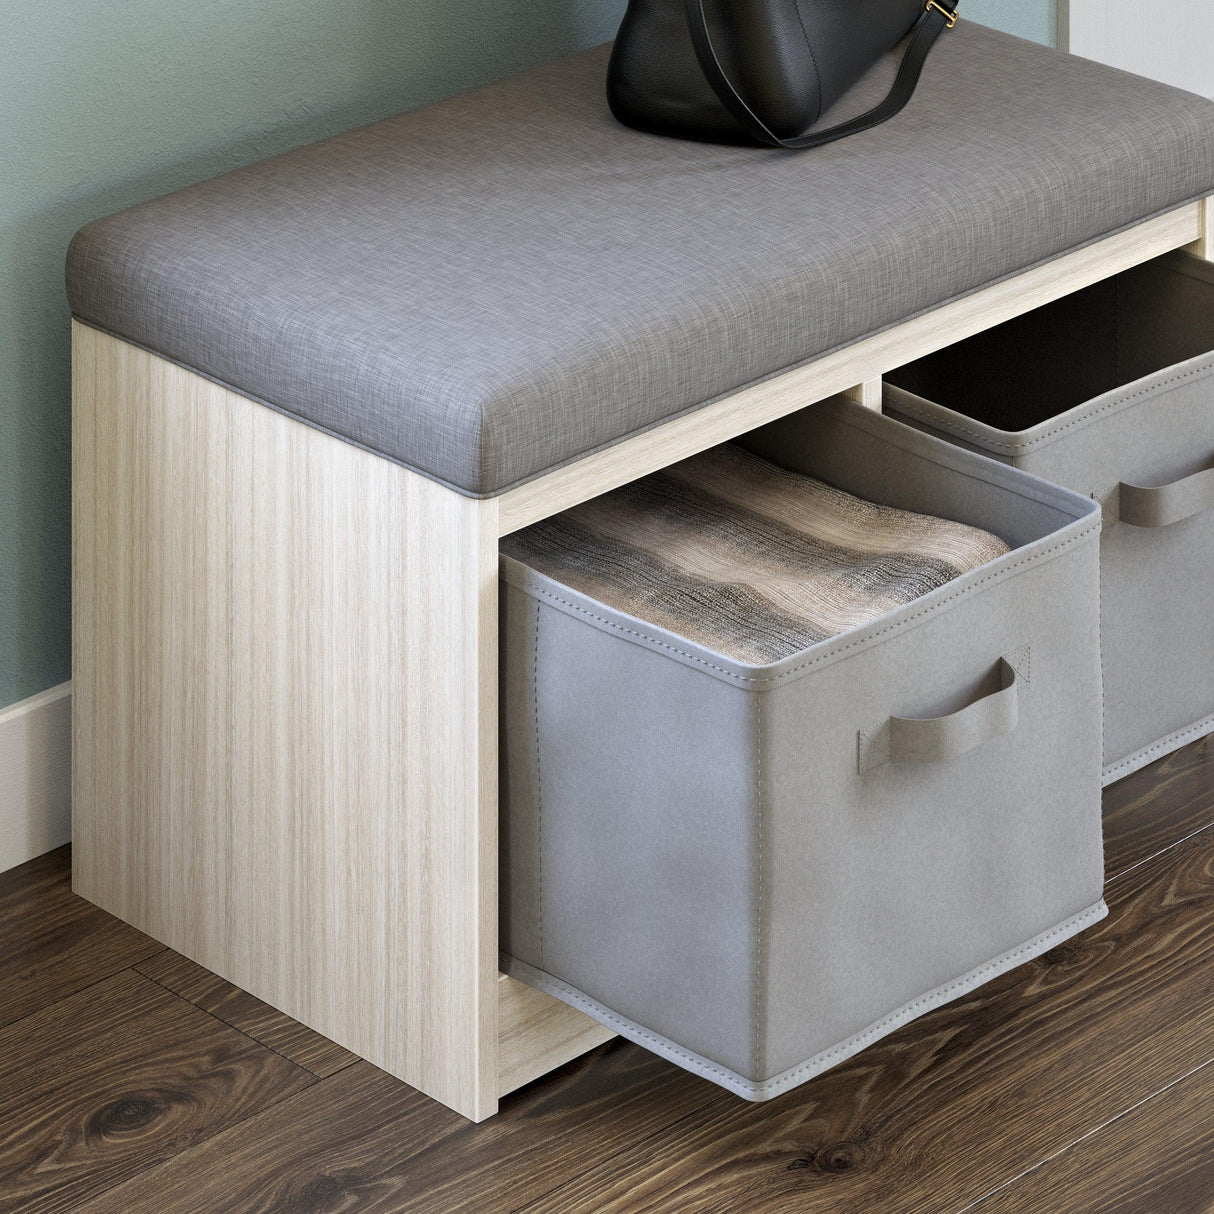 Blariden Gray/natural Storage Bench - Ella Furniture